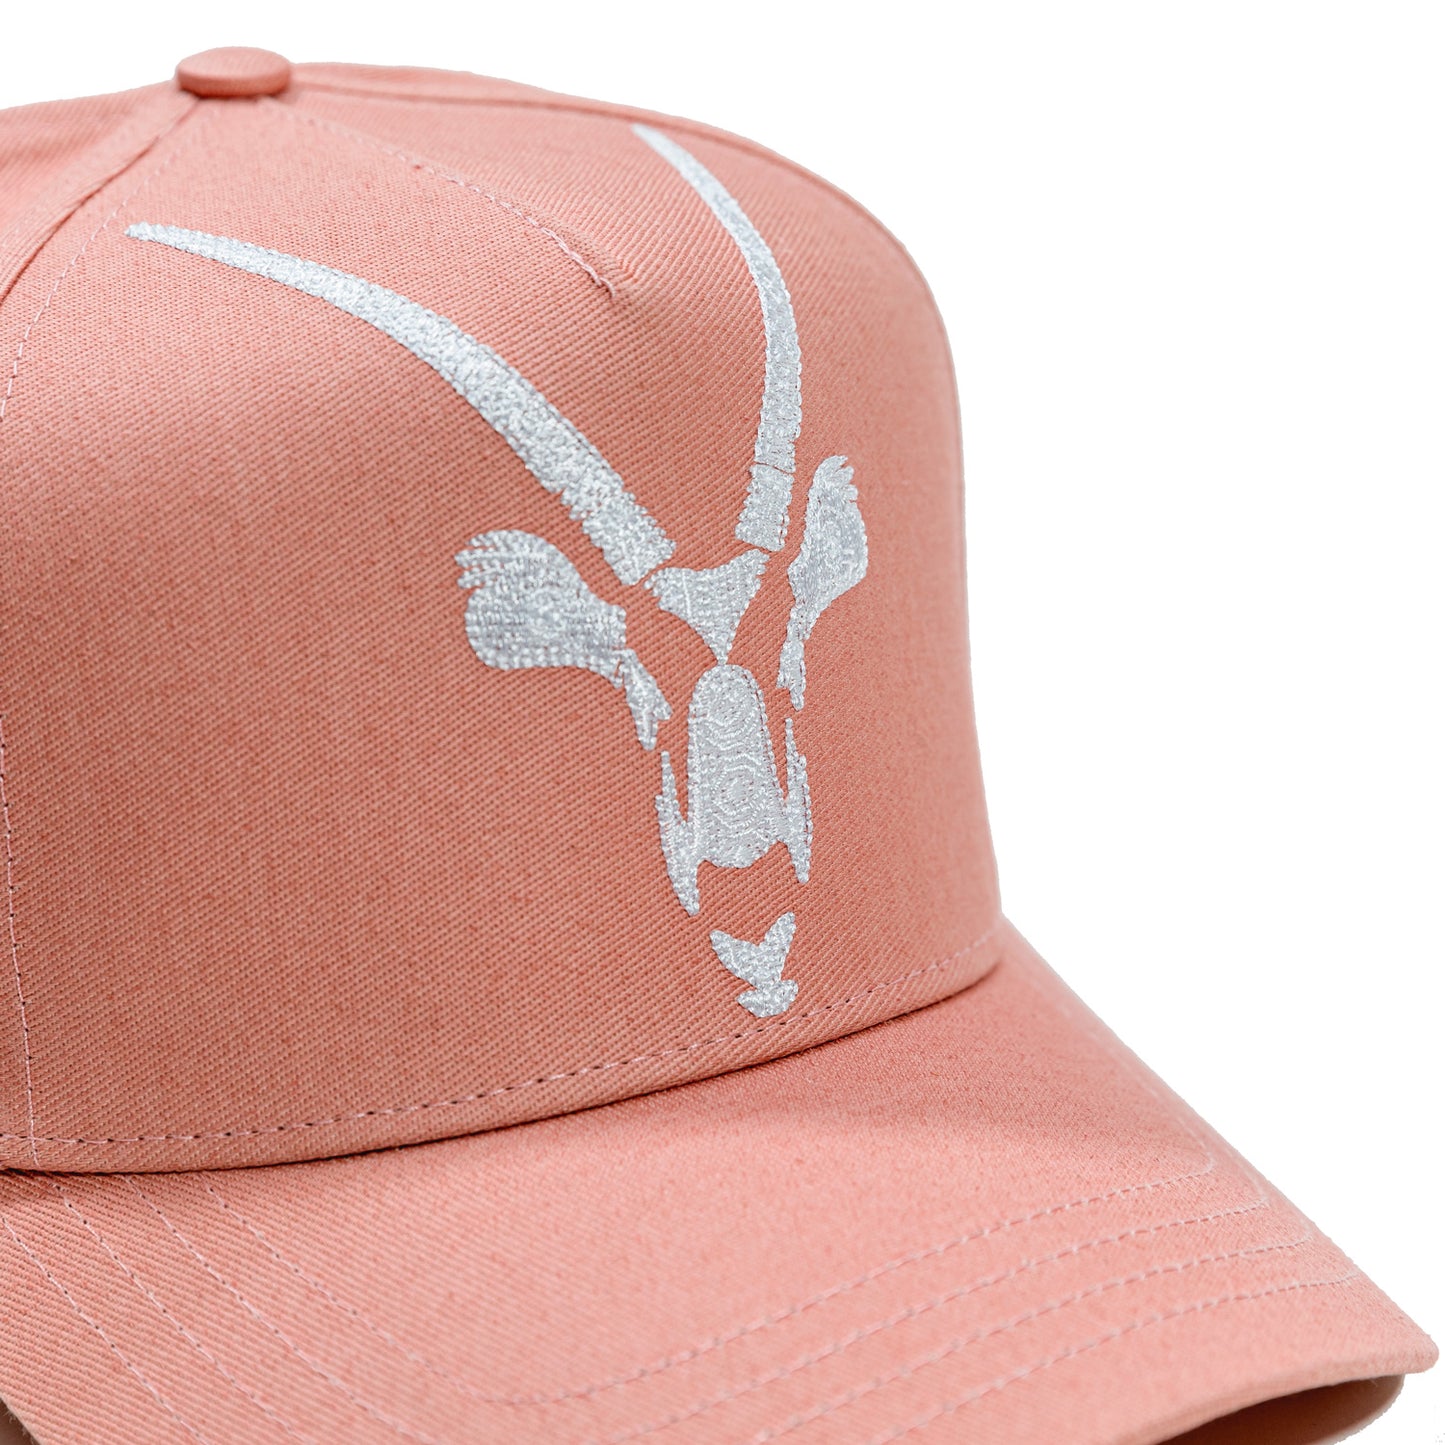 Pink Oryx baseball cap, Man, woman, alsadu, white embroidery, truck cap, unsex